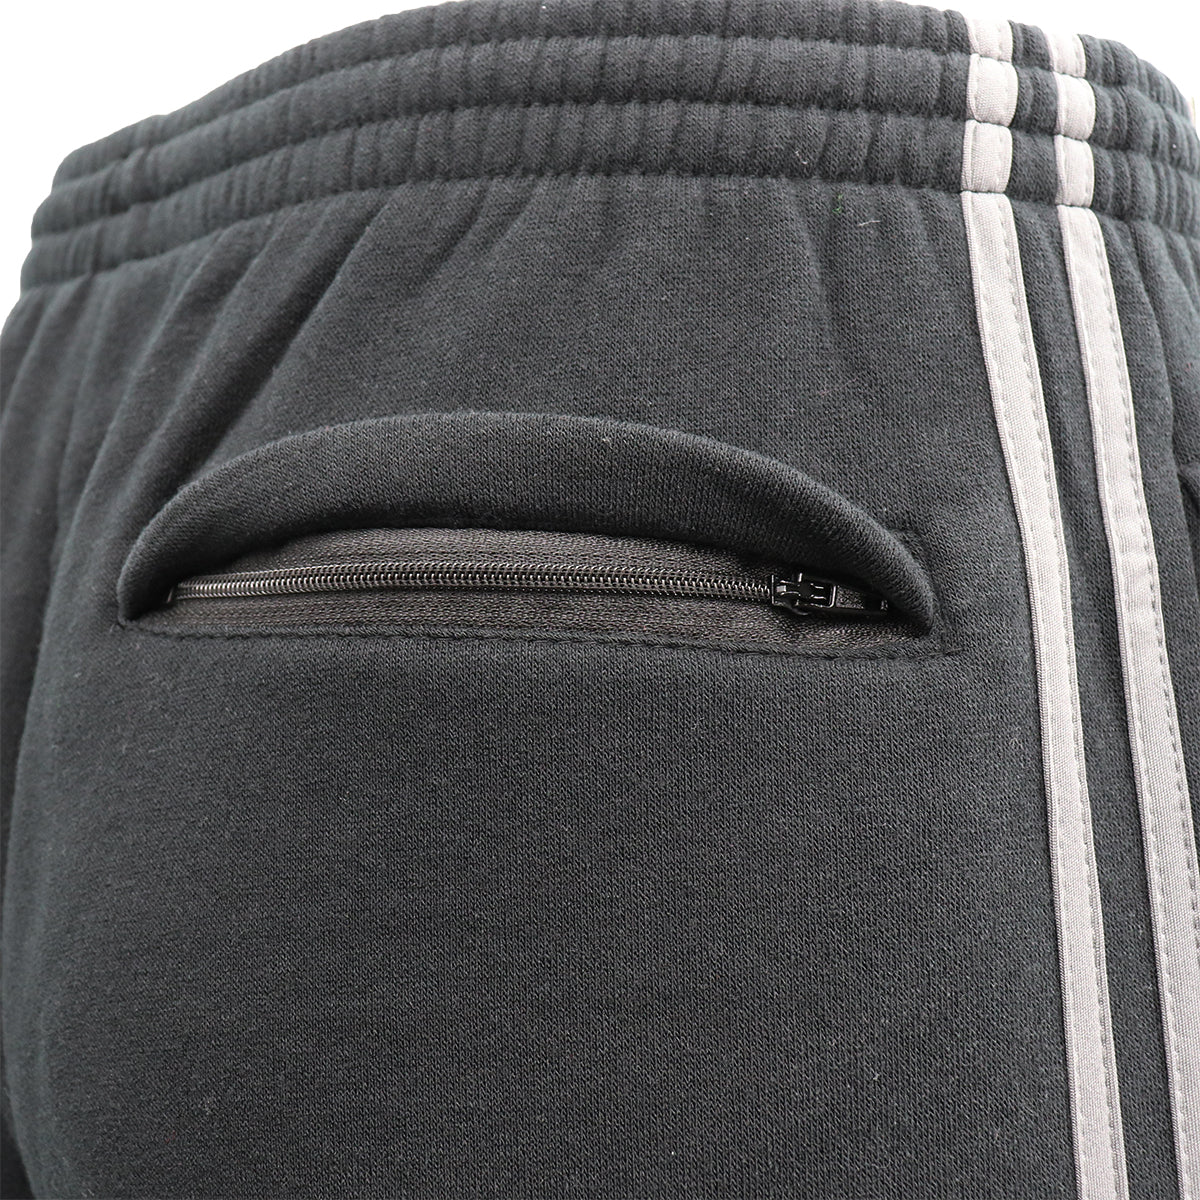 Men's Fleece Casual Sports Track Pants w Zip Pocket Striped Sweat Trousers S-6XL, Black w Grey Stripes, L